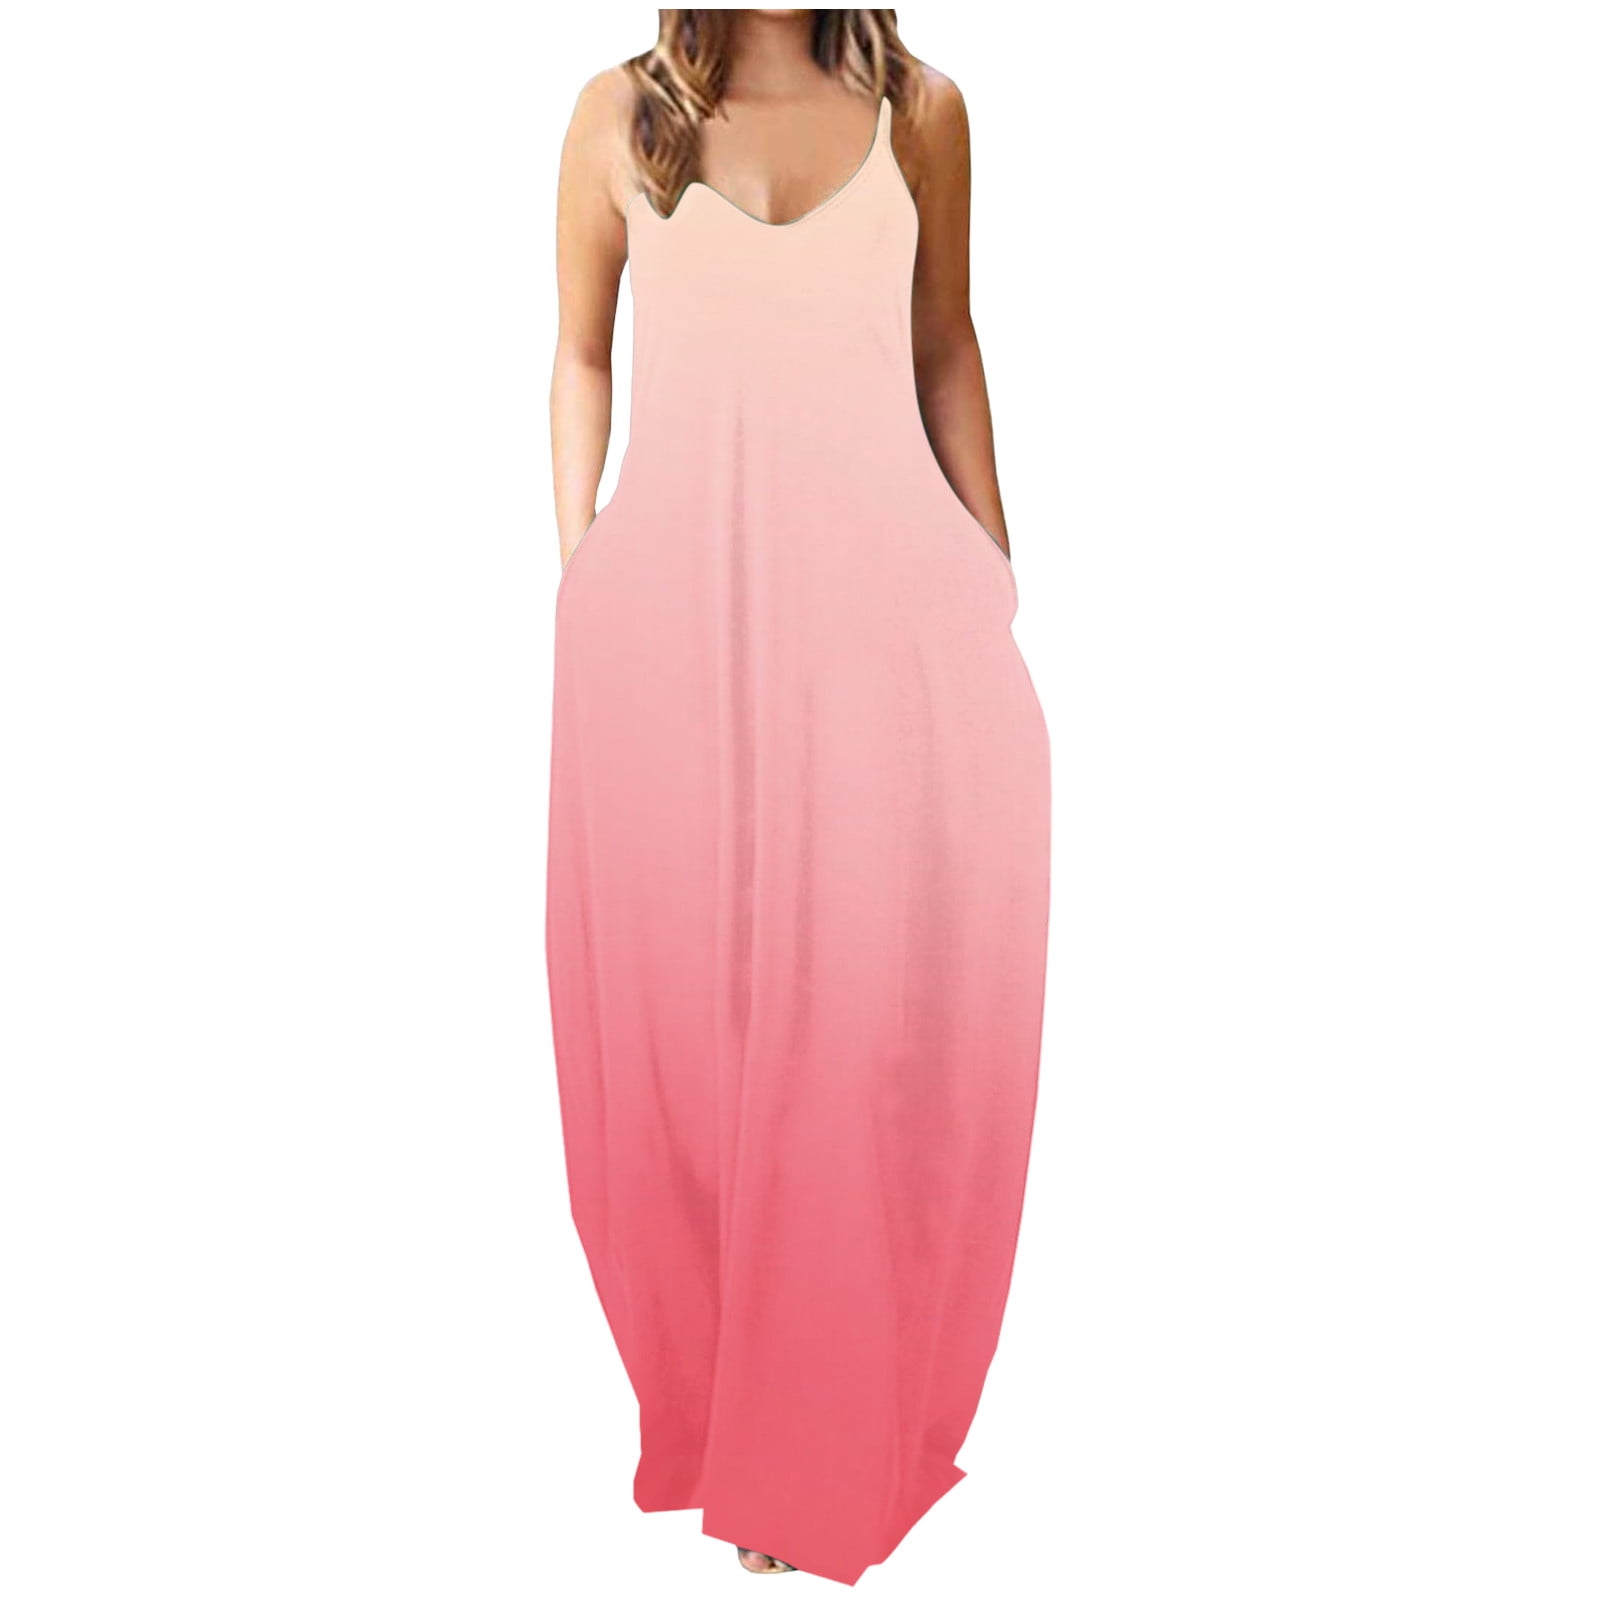 Fuieoe Women's Summer Dresses Maxi Dress Plus Size Casual Floral Print ...